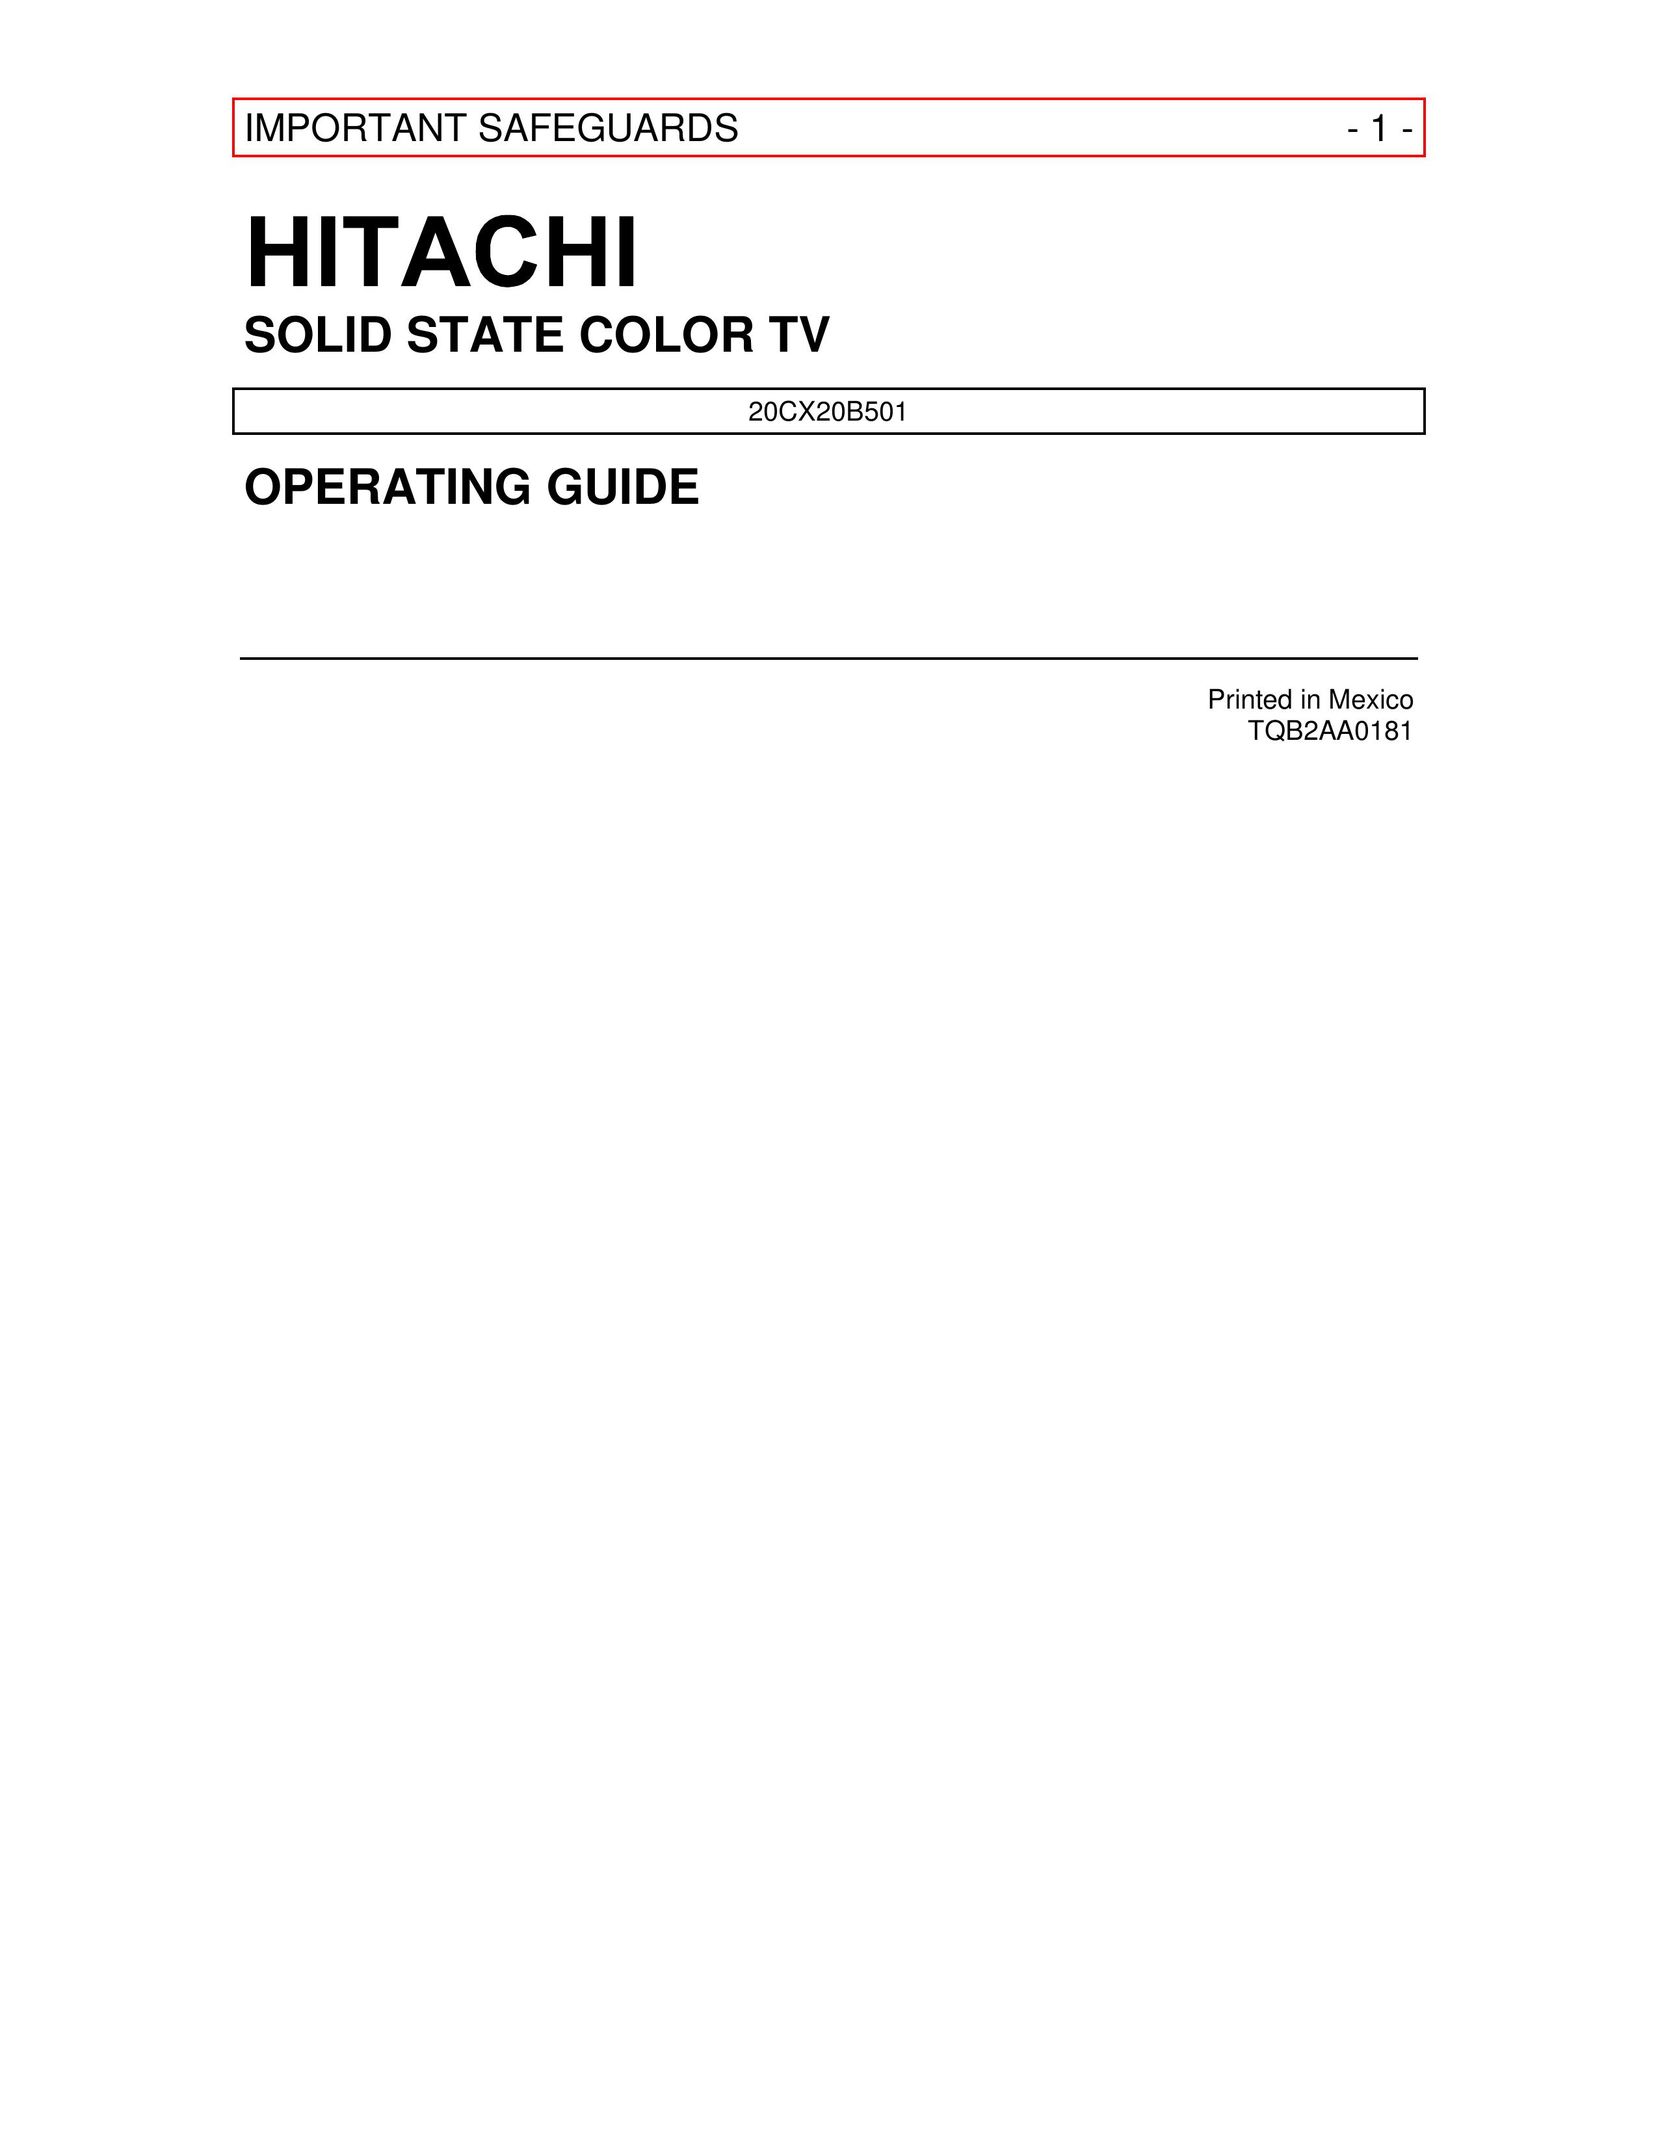 Hitachi 20CX20B501 CRT Television User Manual